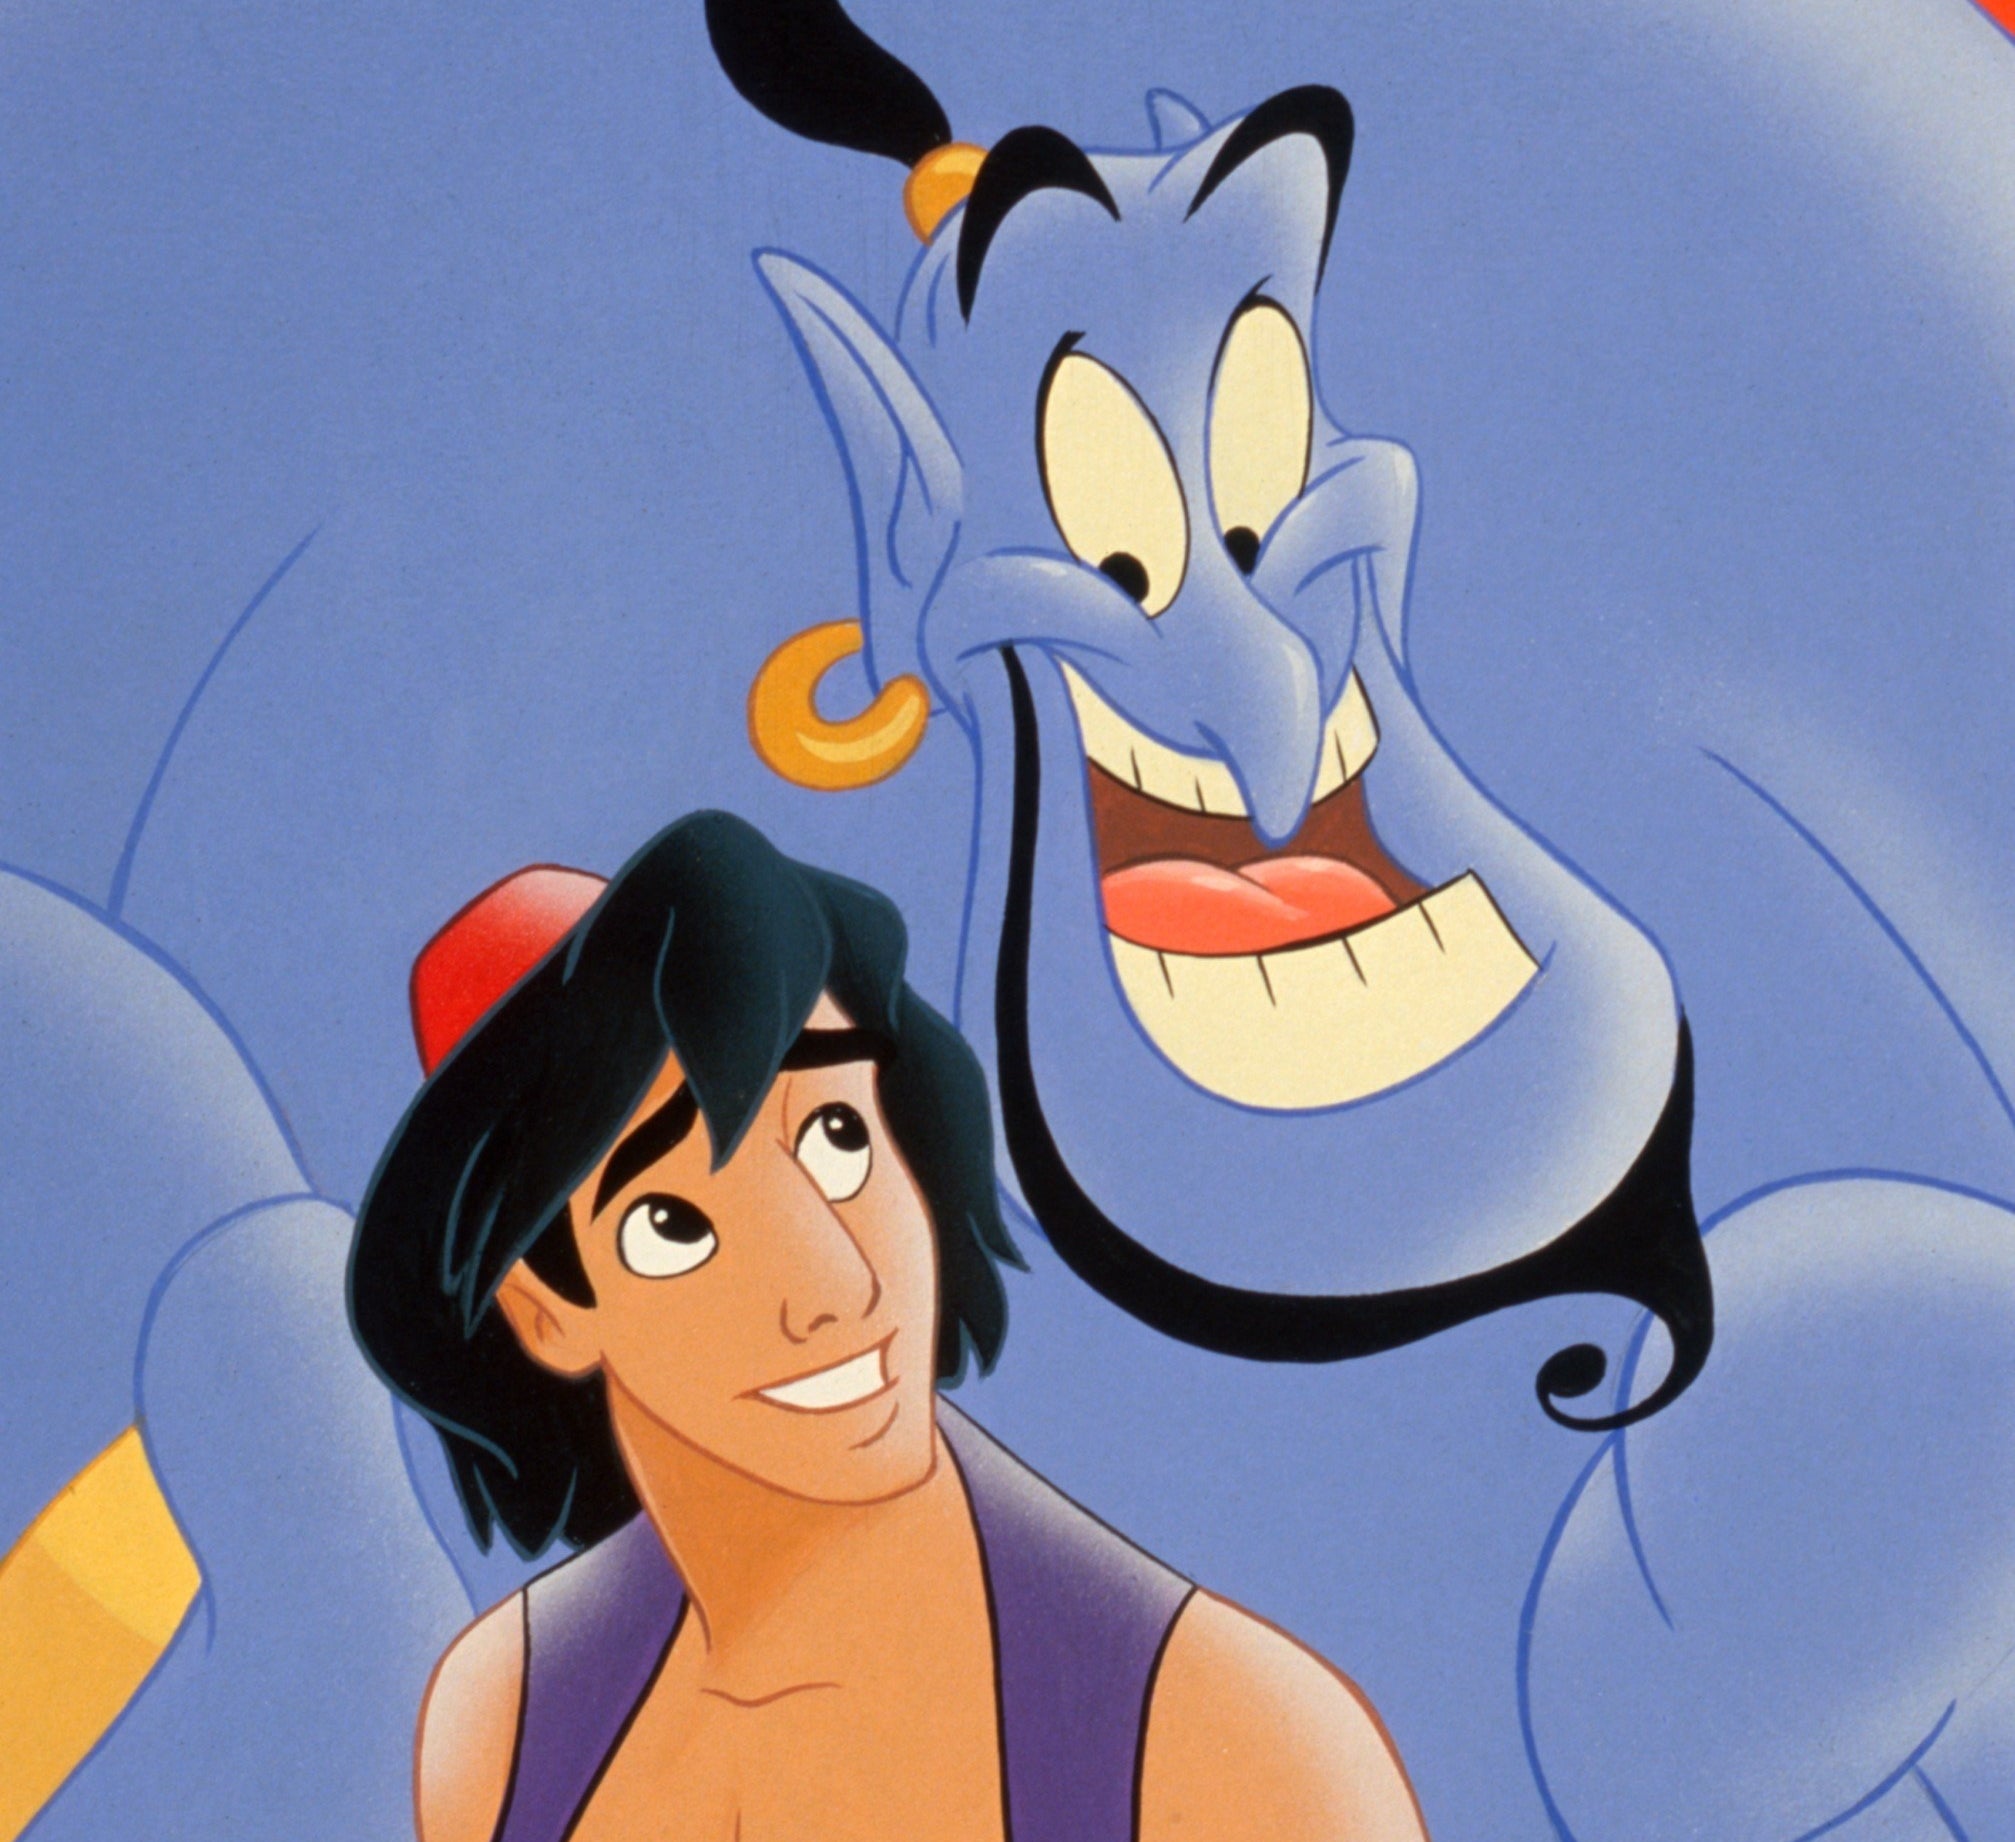 Aladdin and Genie